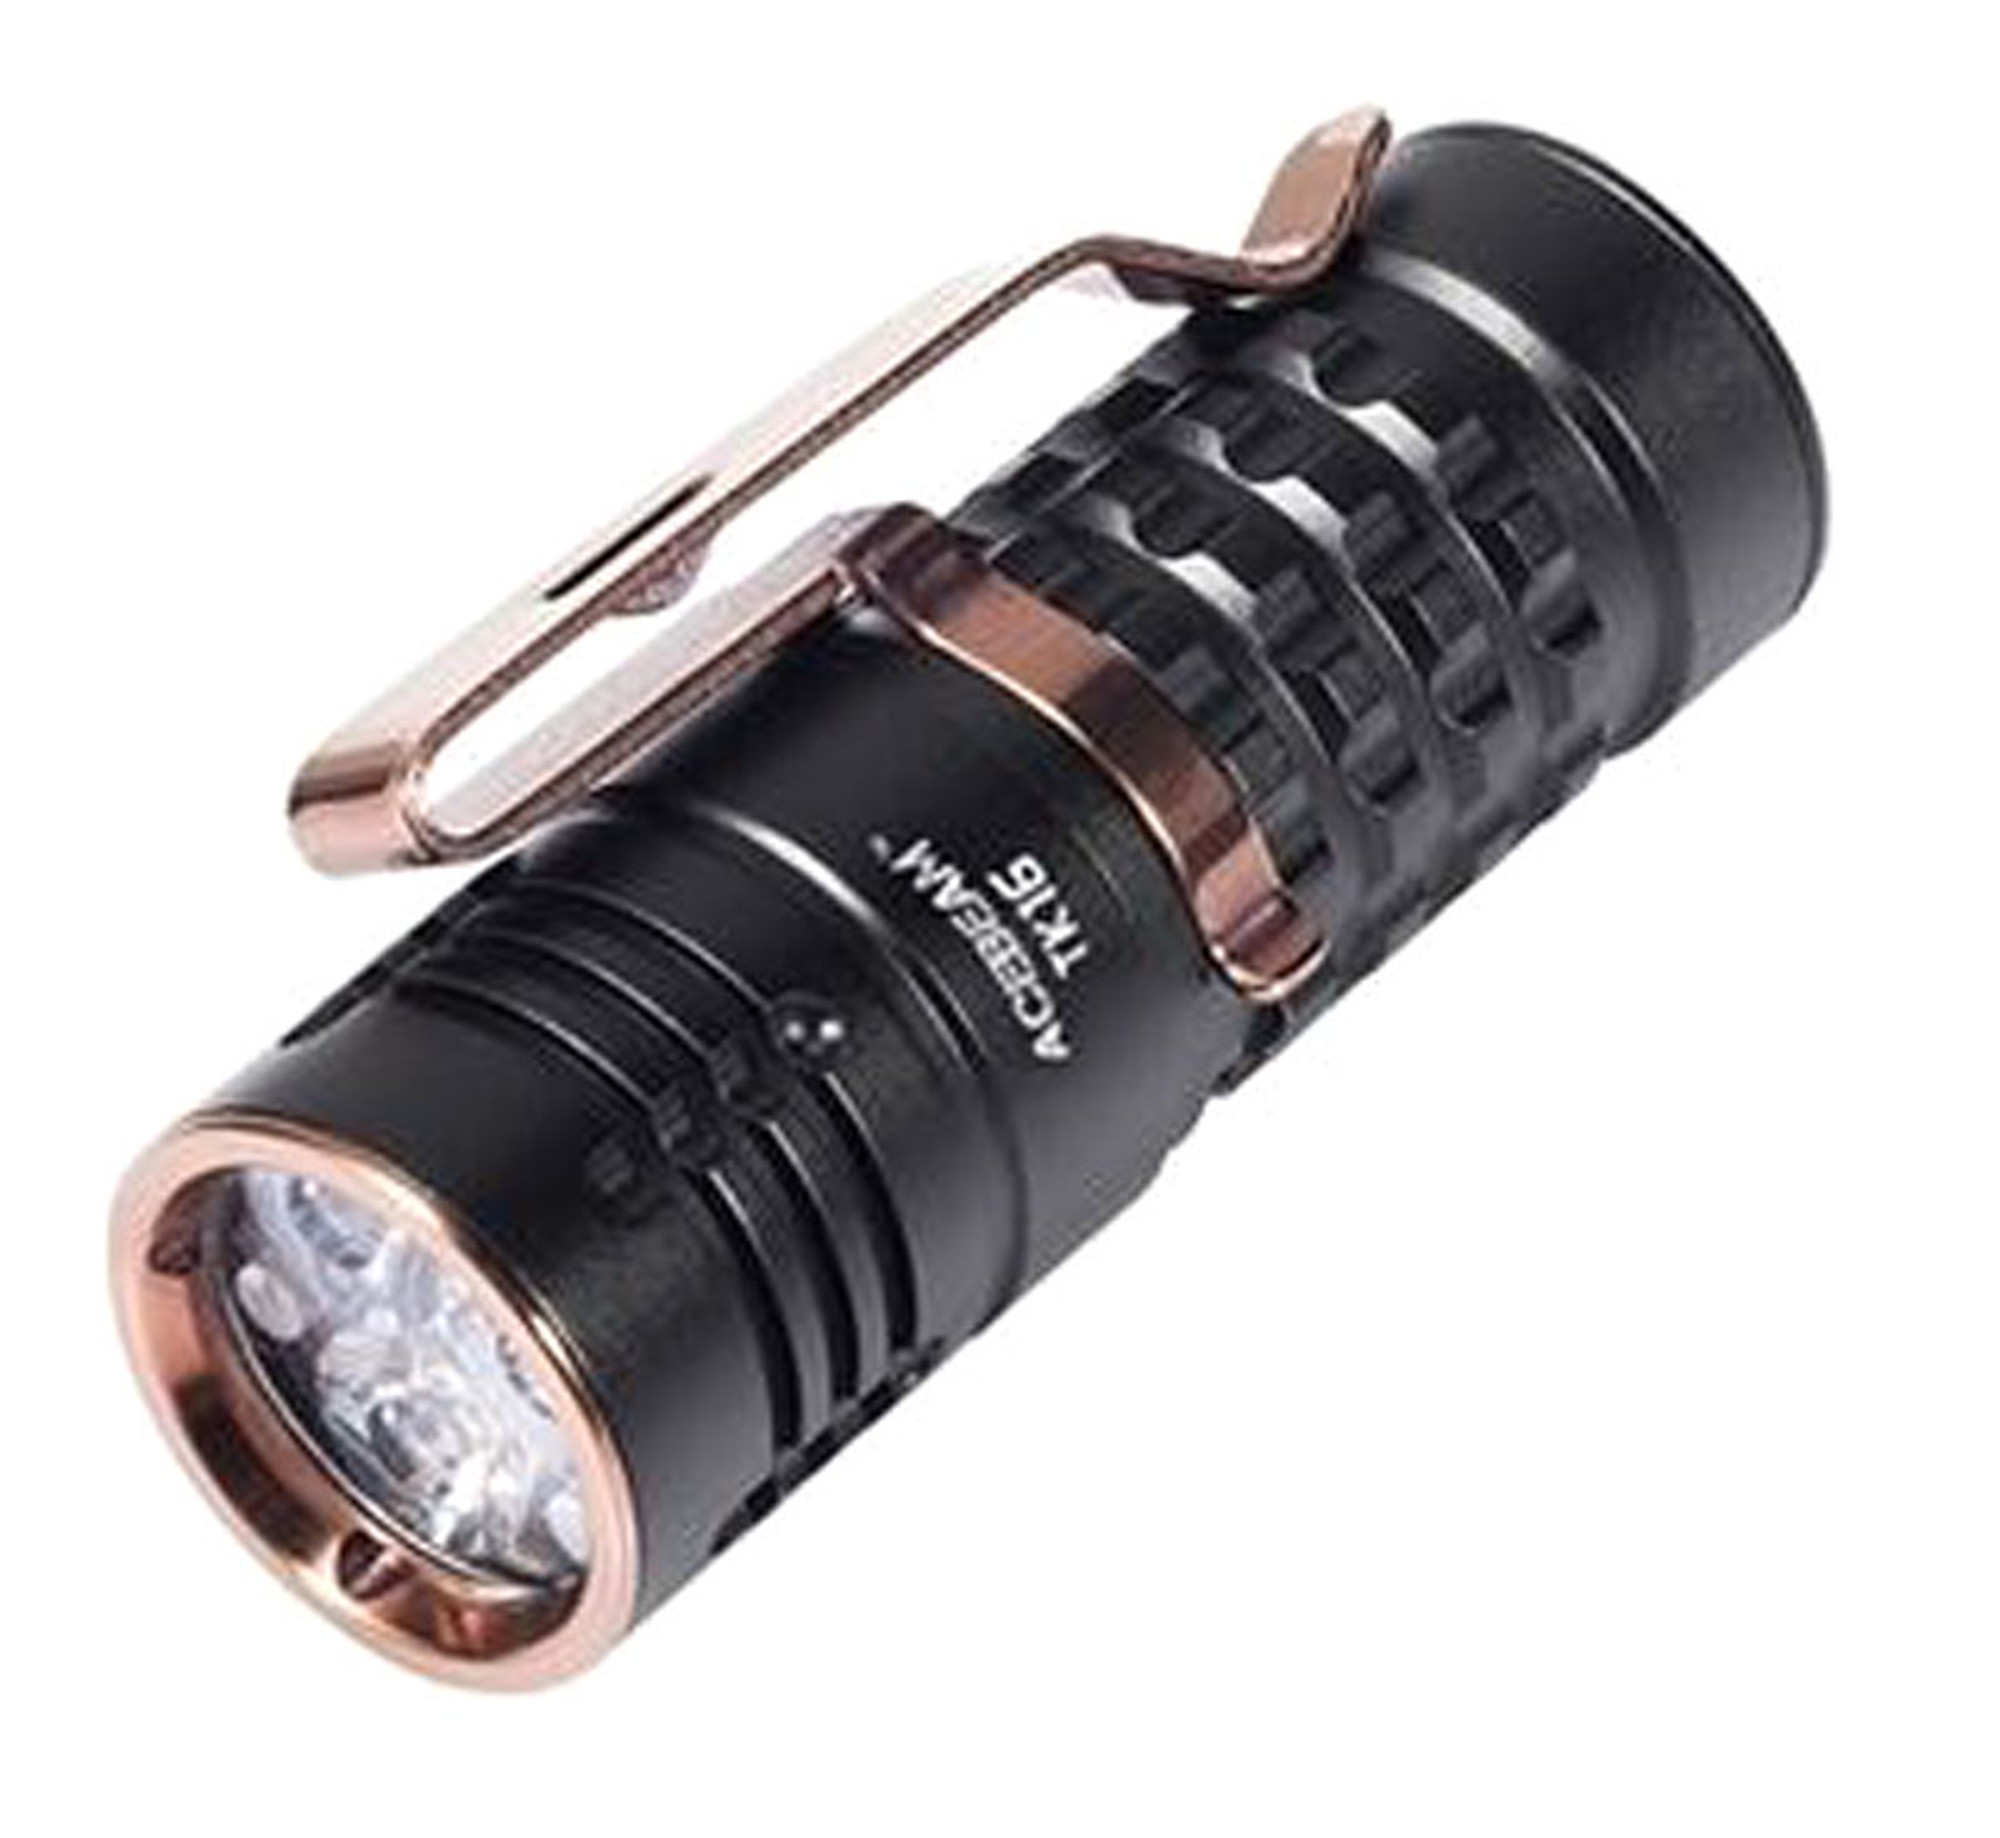 Acebeam L18 Compact Long Range Flashlight - 1500 Lumens